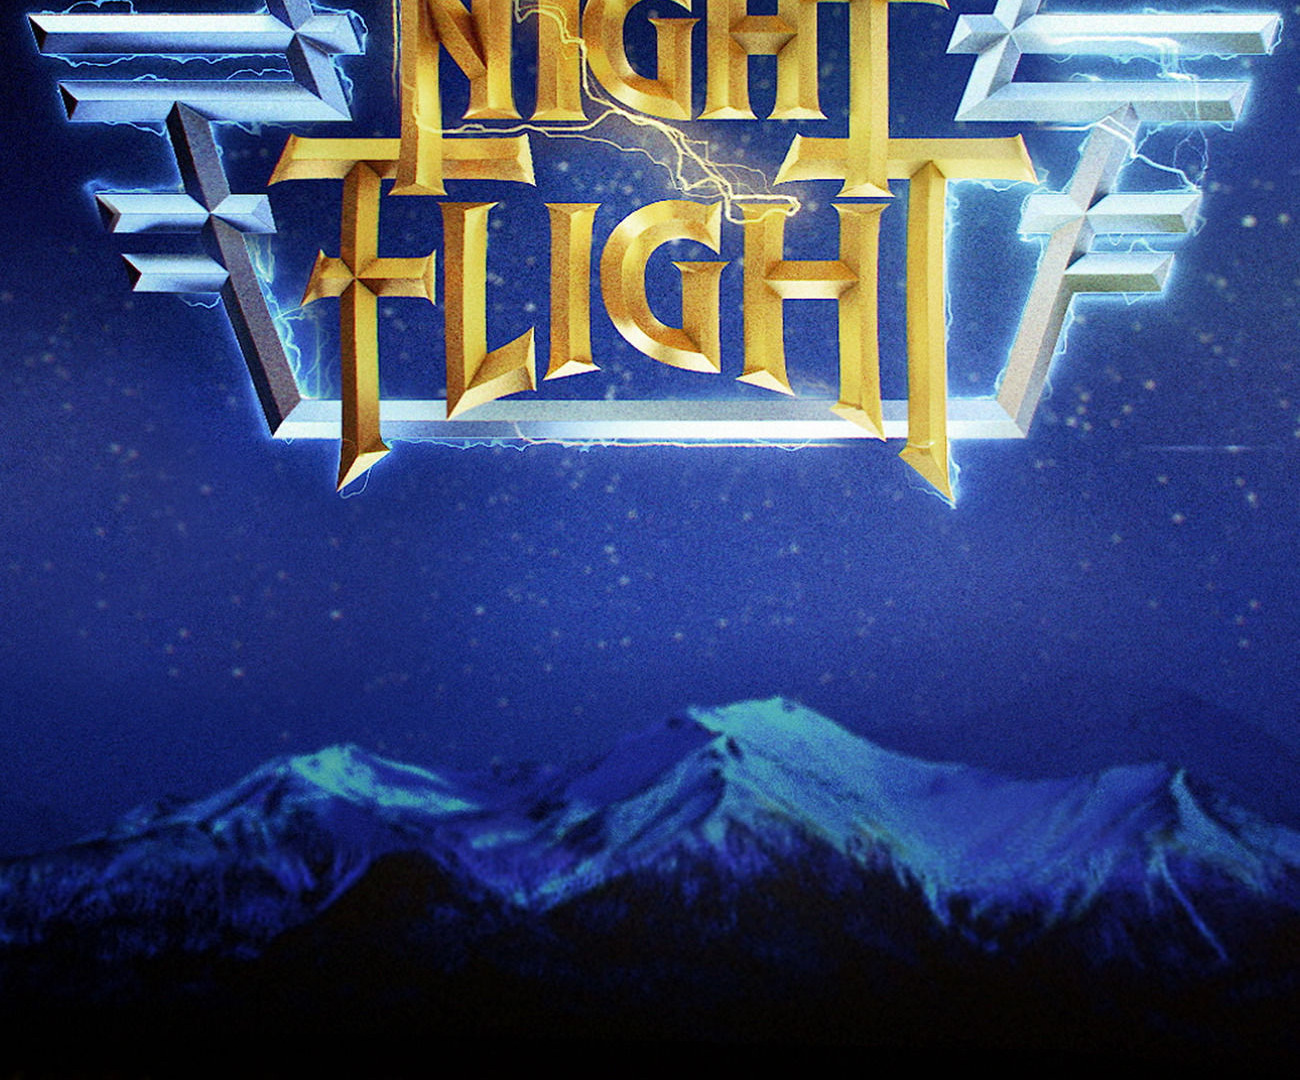 Show Night Flight